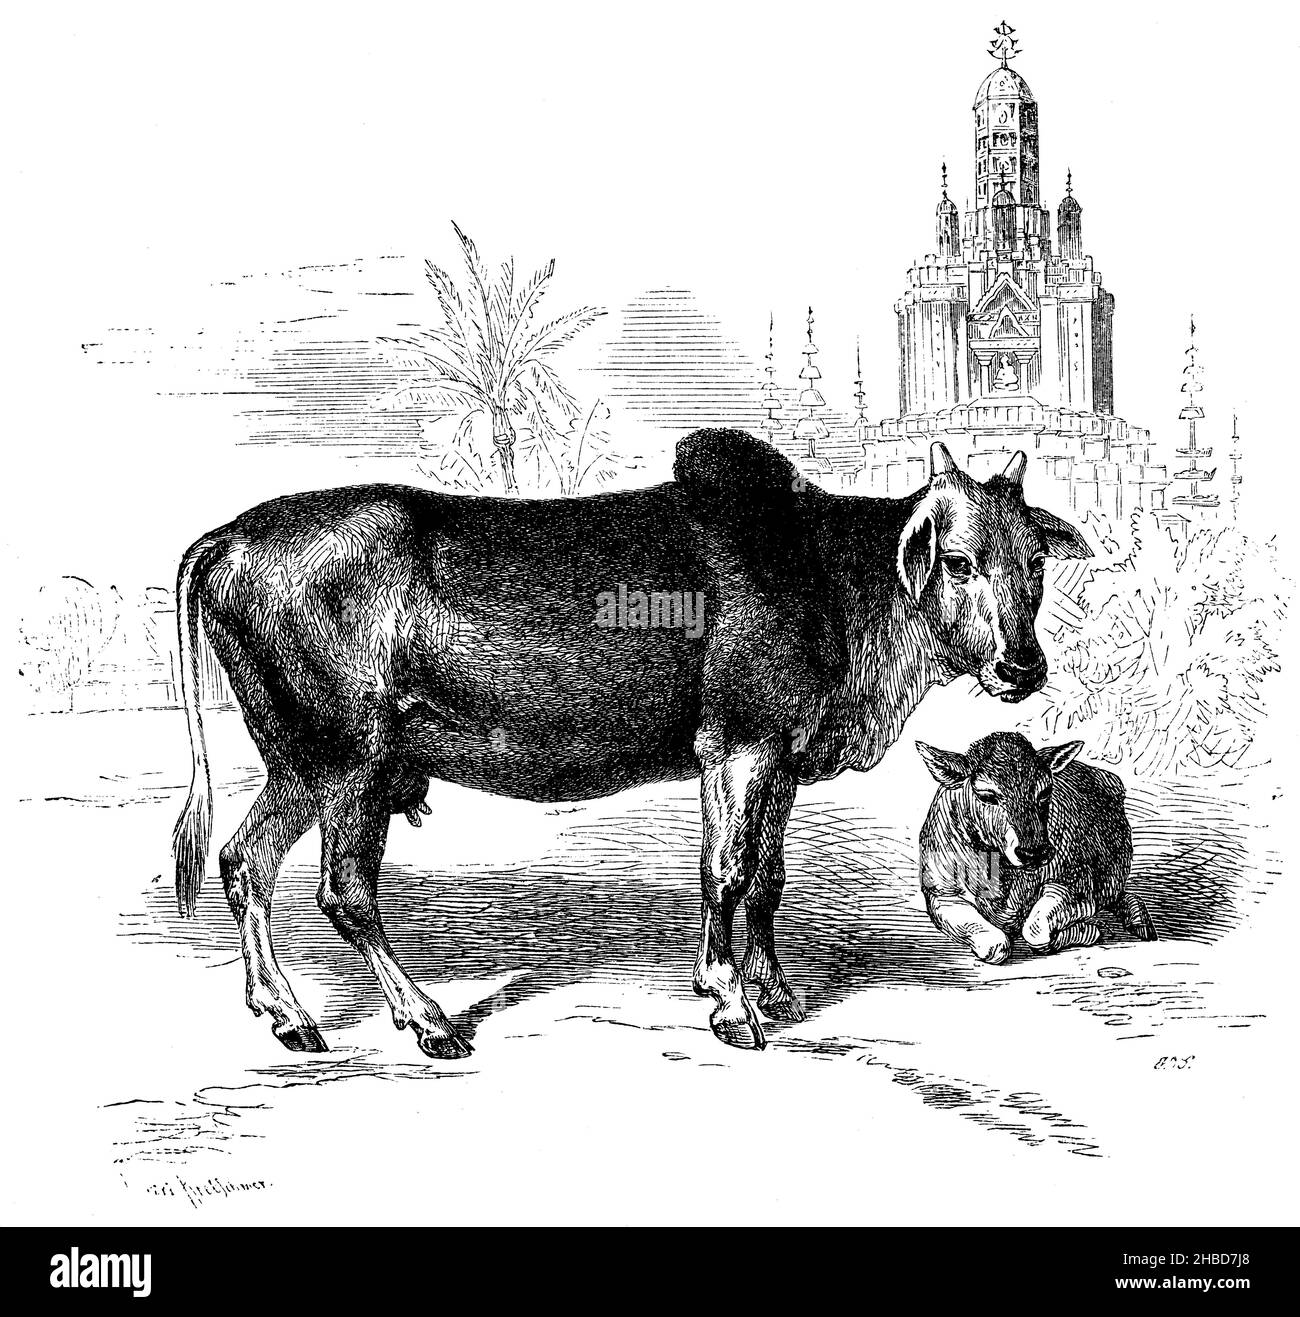 Indian zebu, , R[obert] Kretschmer und F.O. S[chmid] (zoology book, 1870), Indisches Zebu, Zébu indien Stock Photo